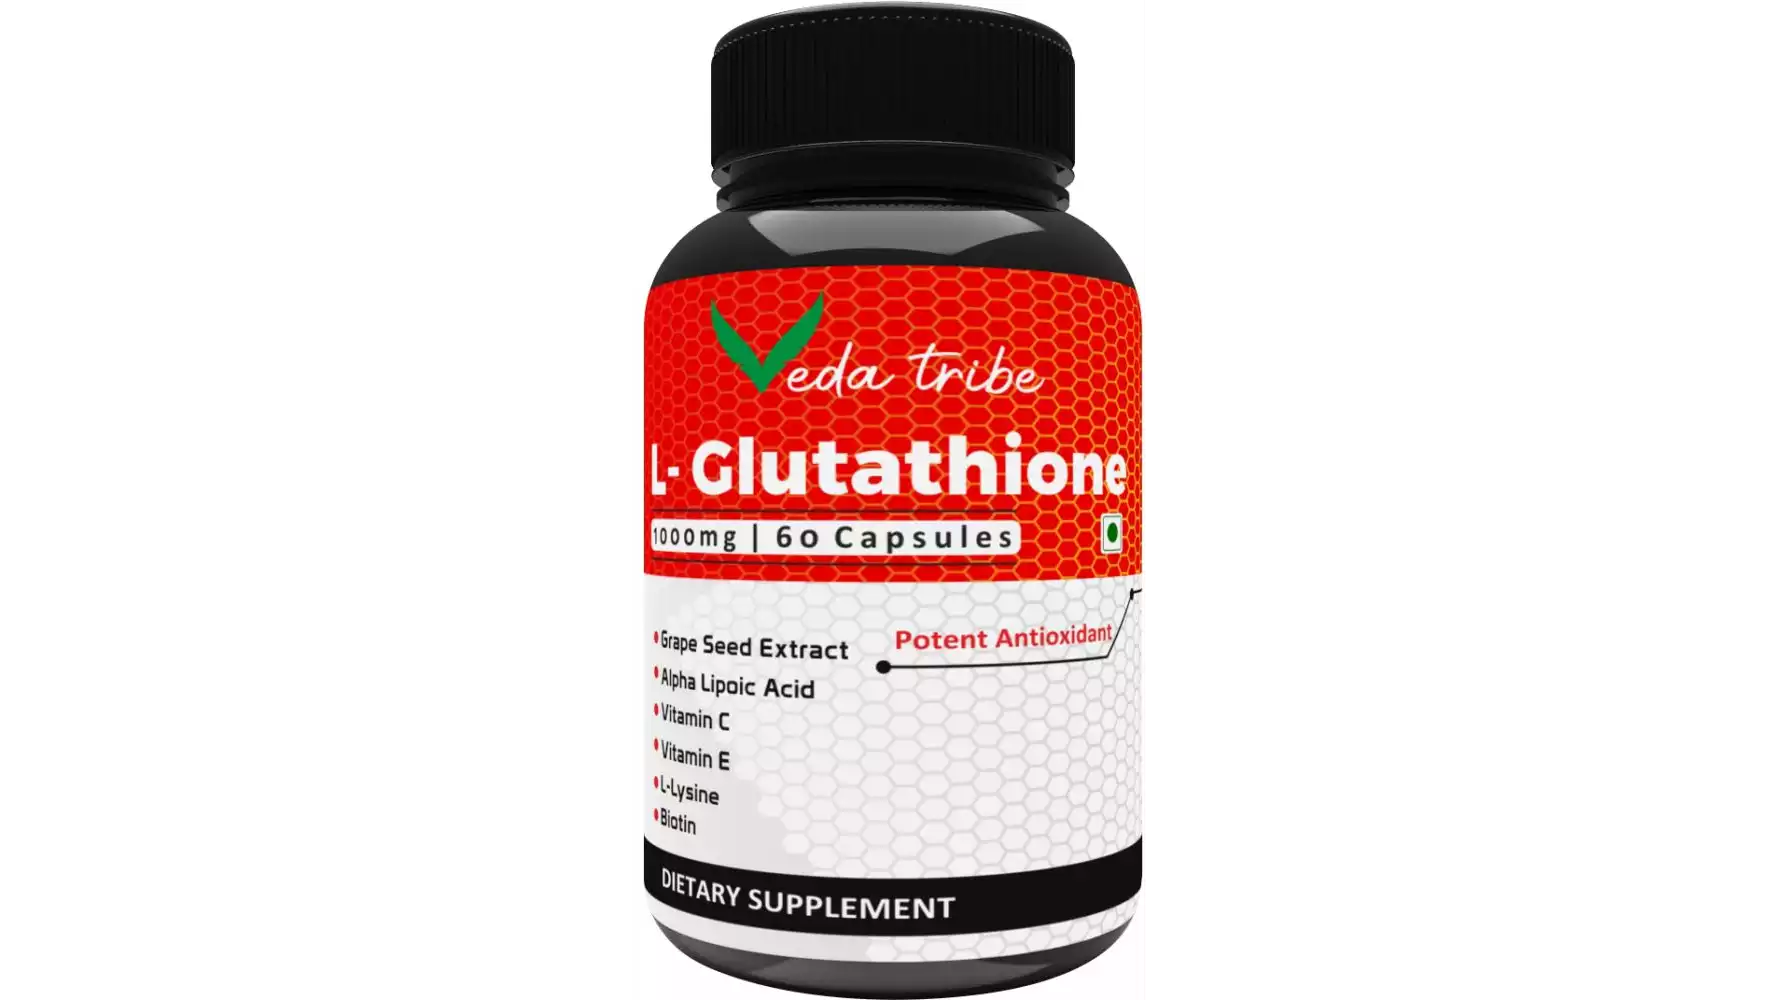 Veda Tribe L Glutathione 1000Mg (60caps)